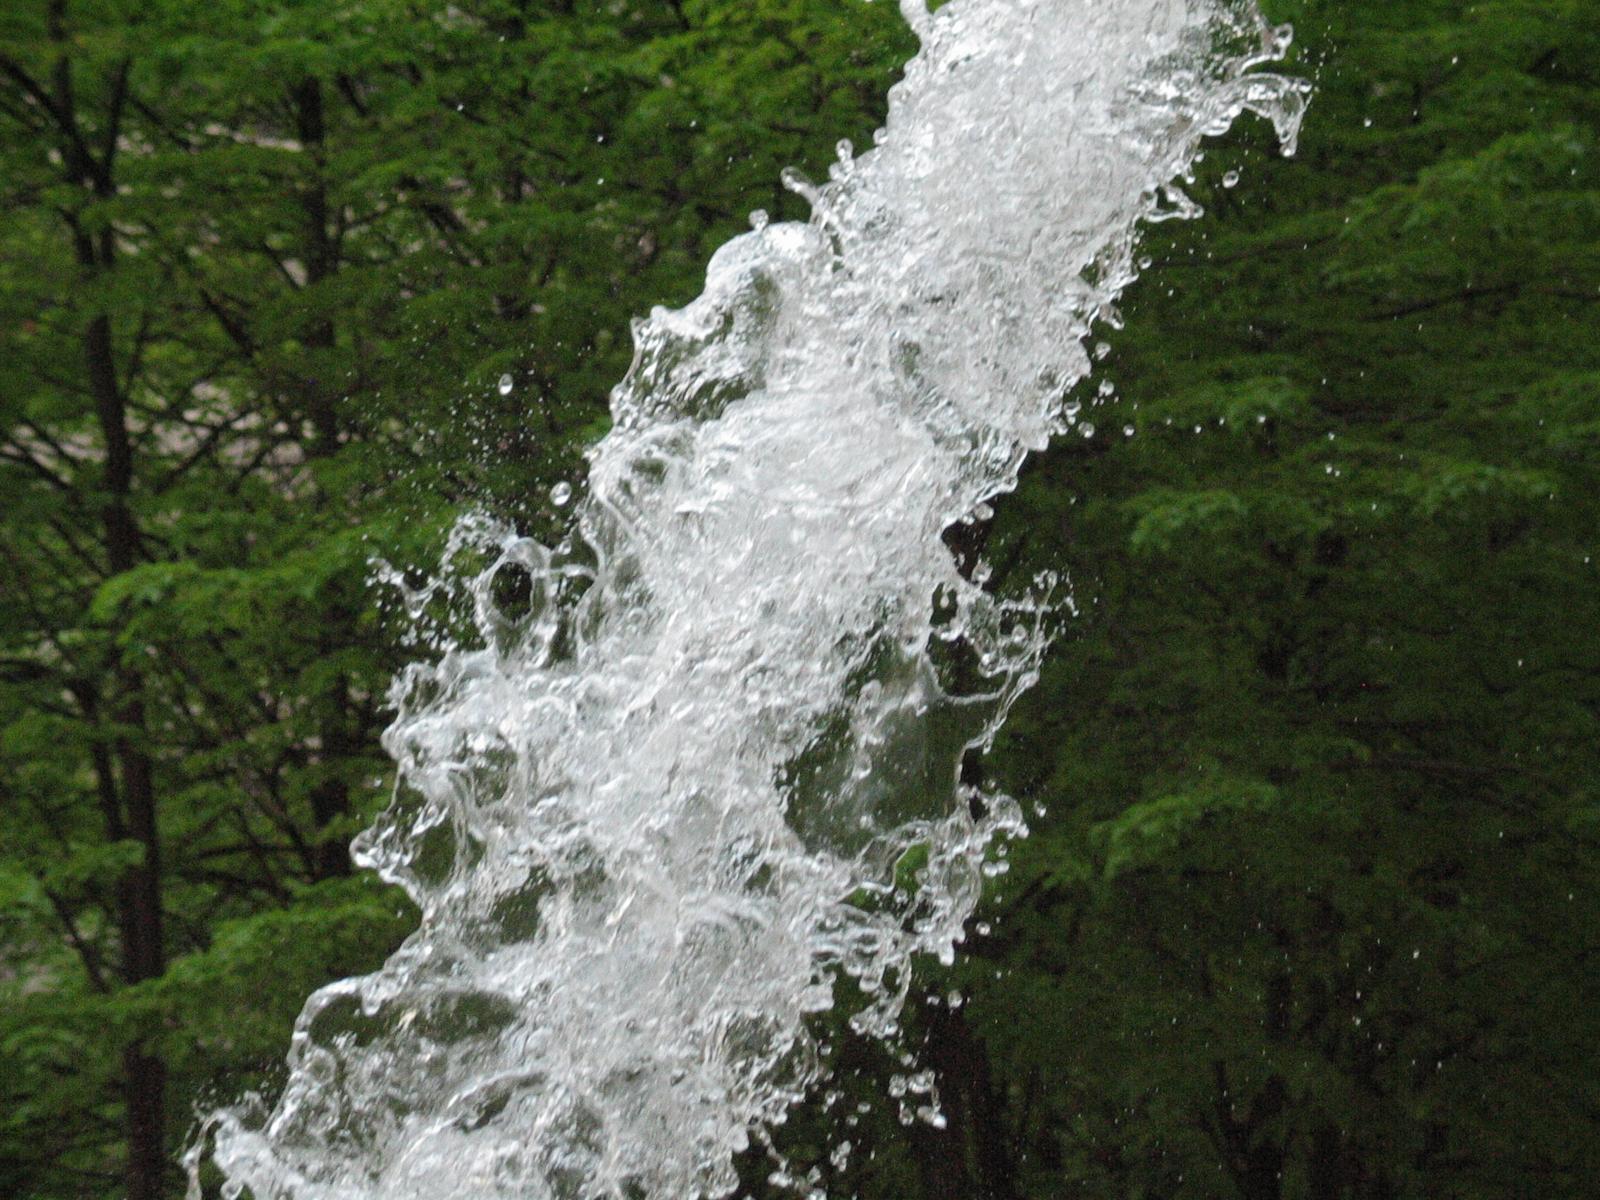 water in freefall